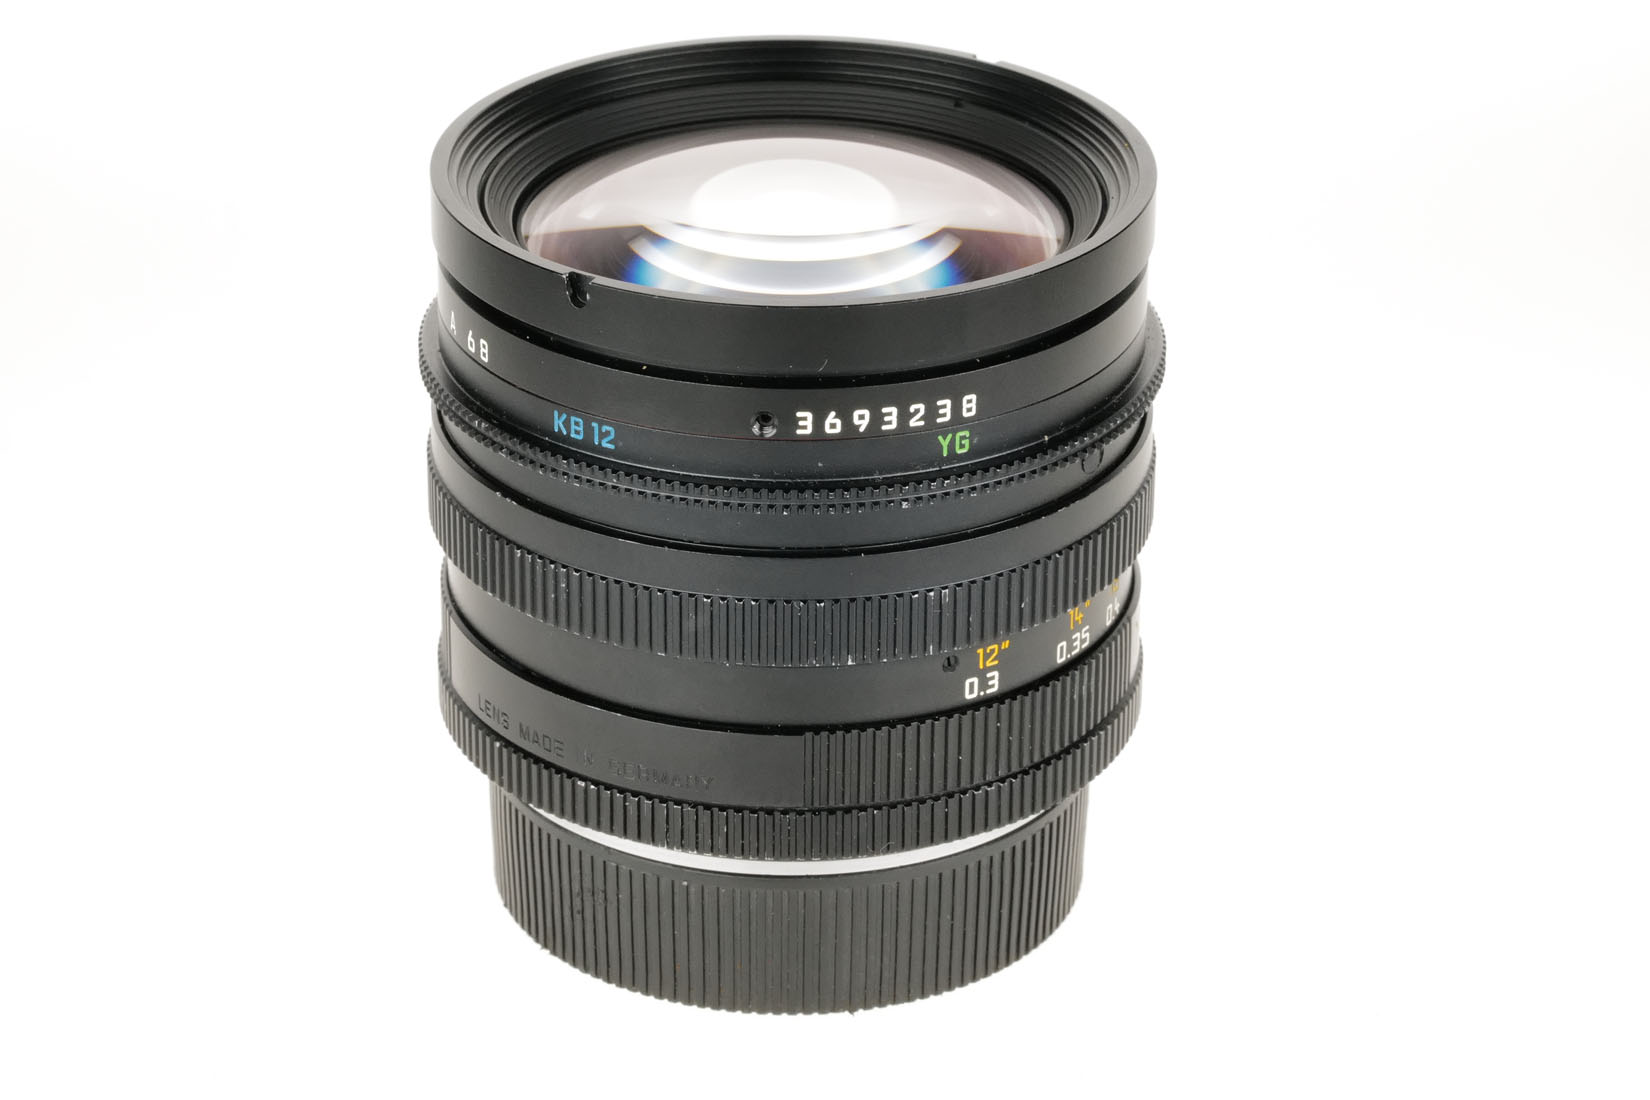 Leica ELMARIT-R 2,8/19mm 3-Cam 11258